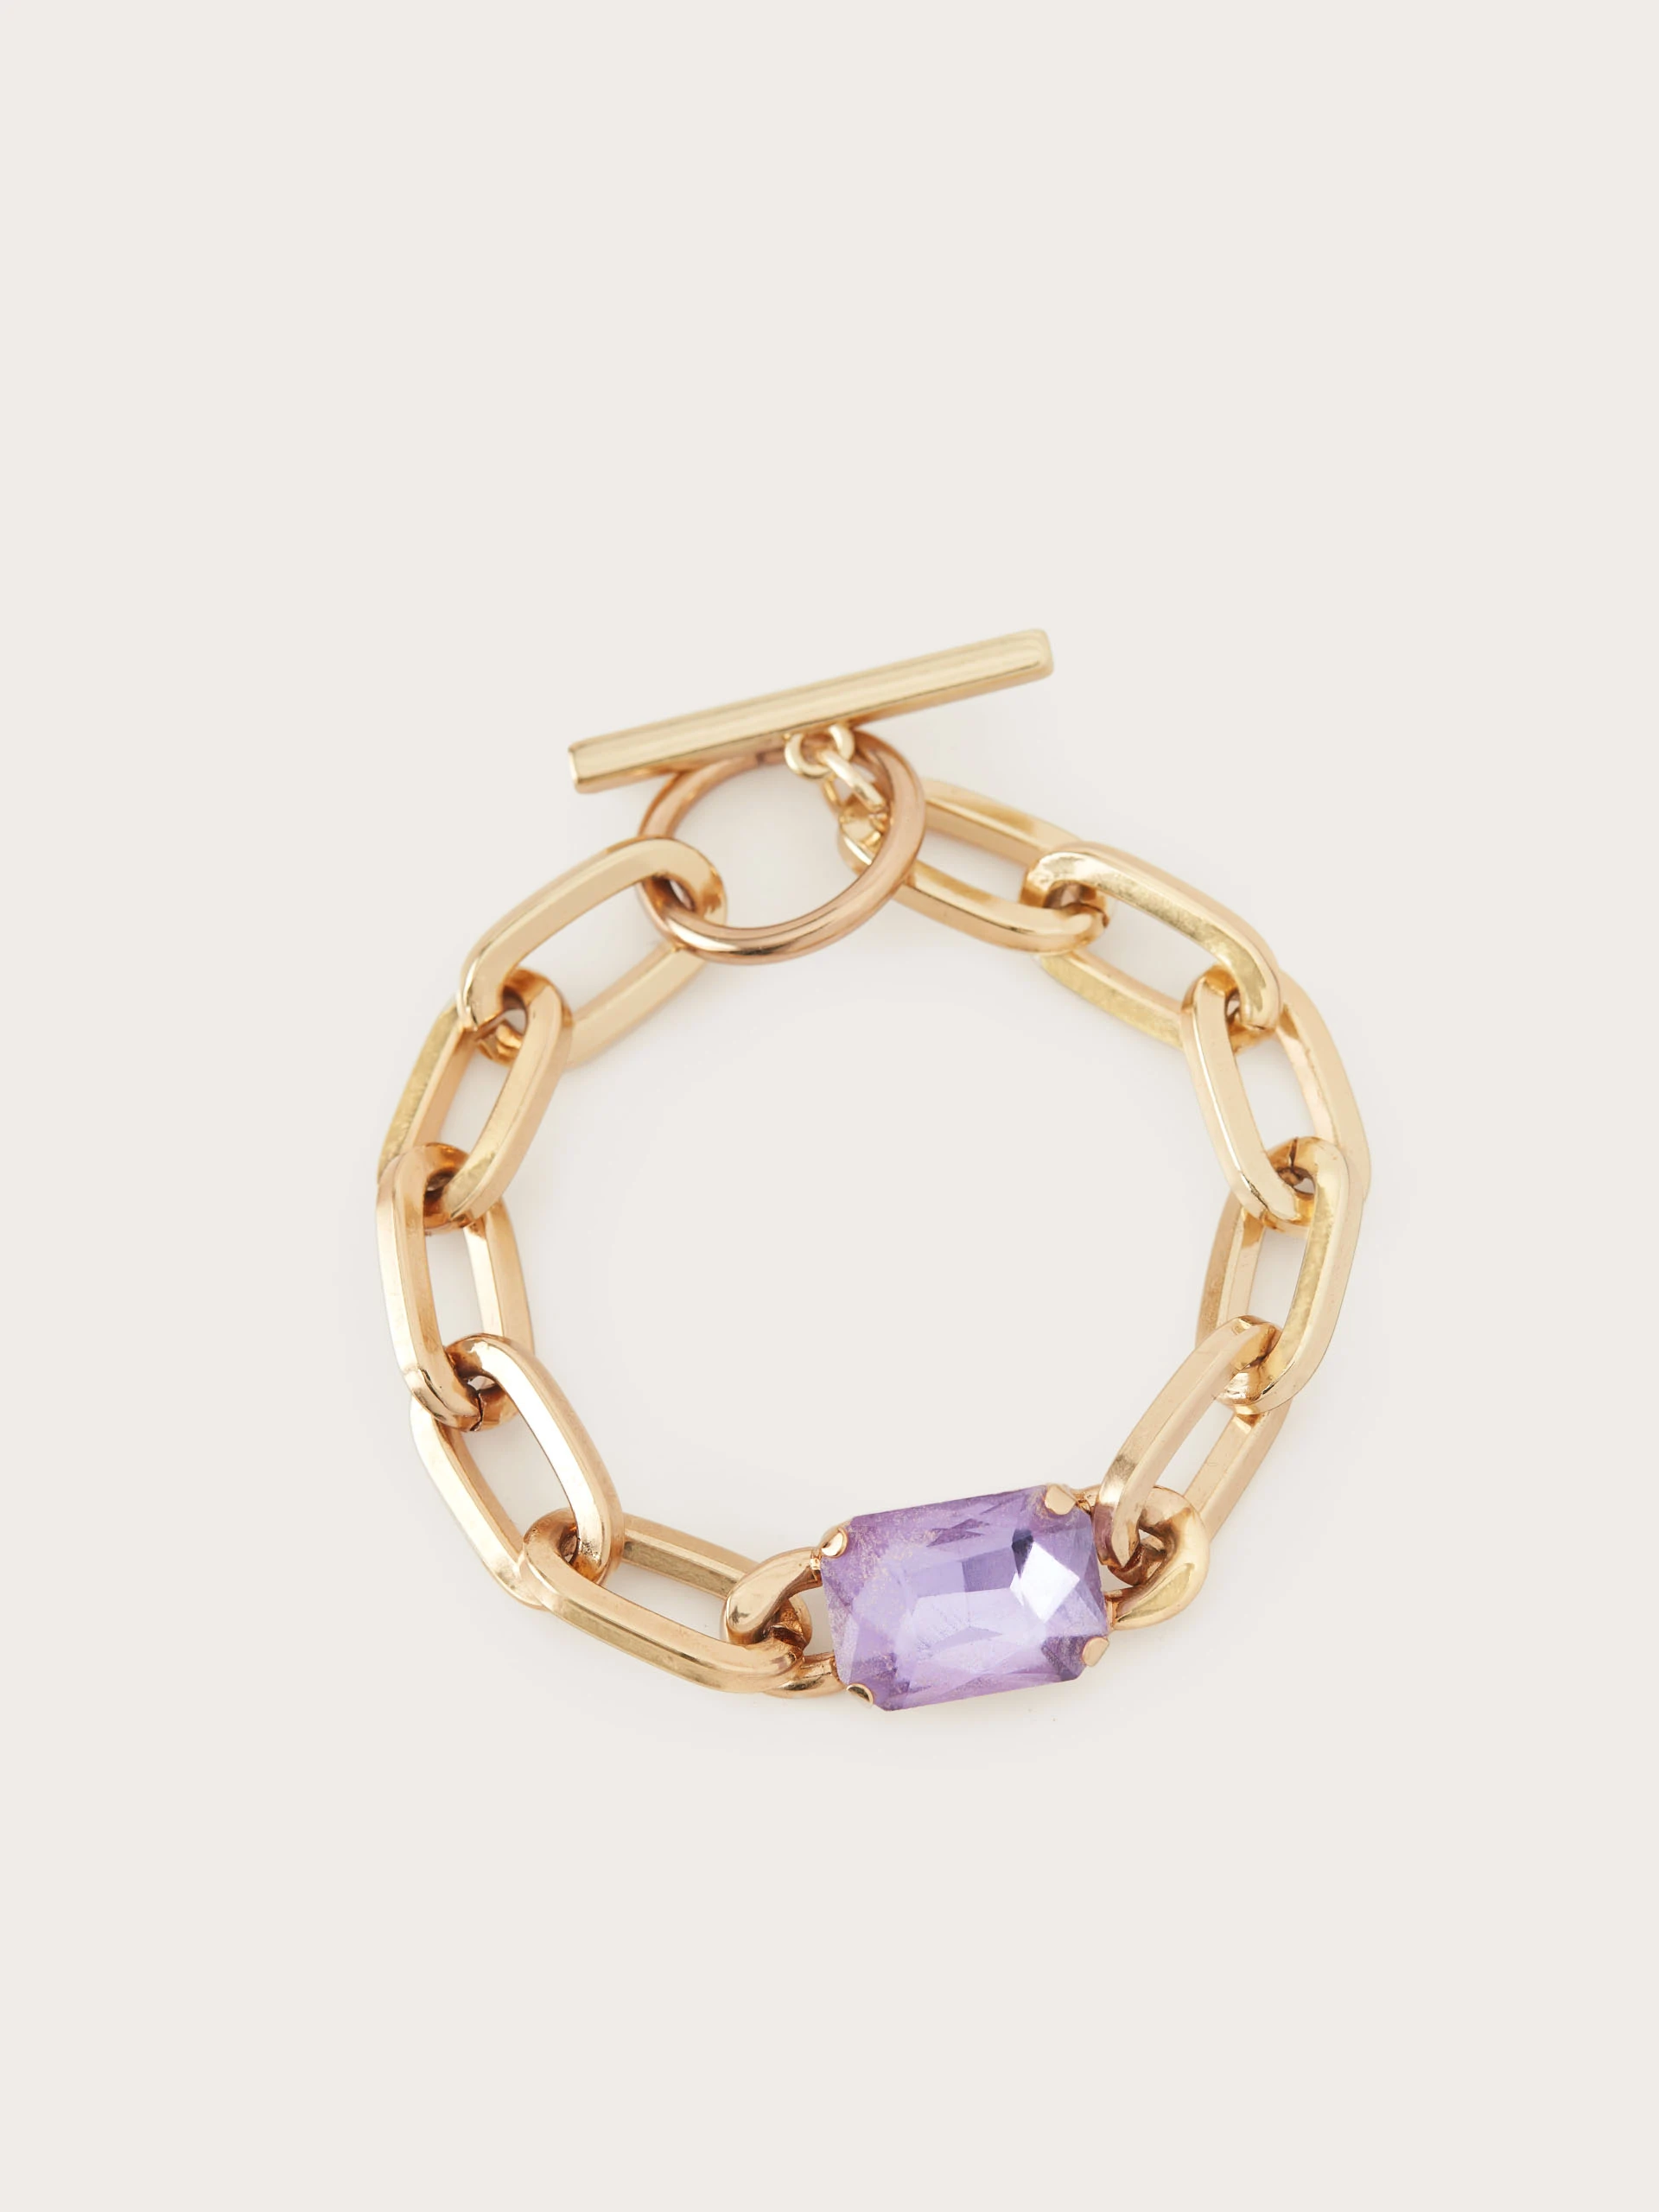 Bracelet with purple stone